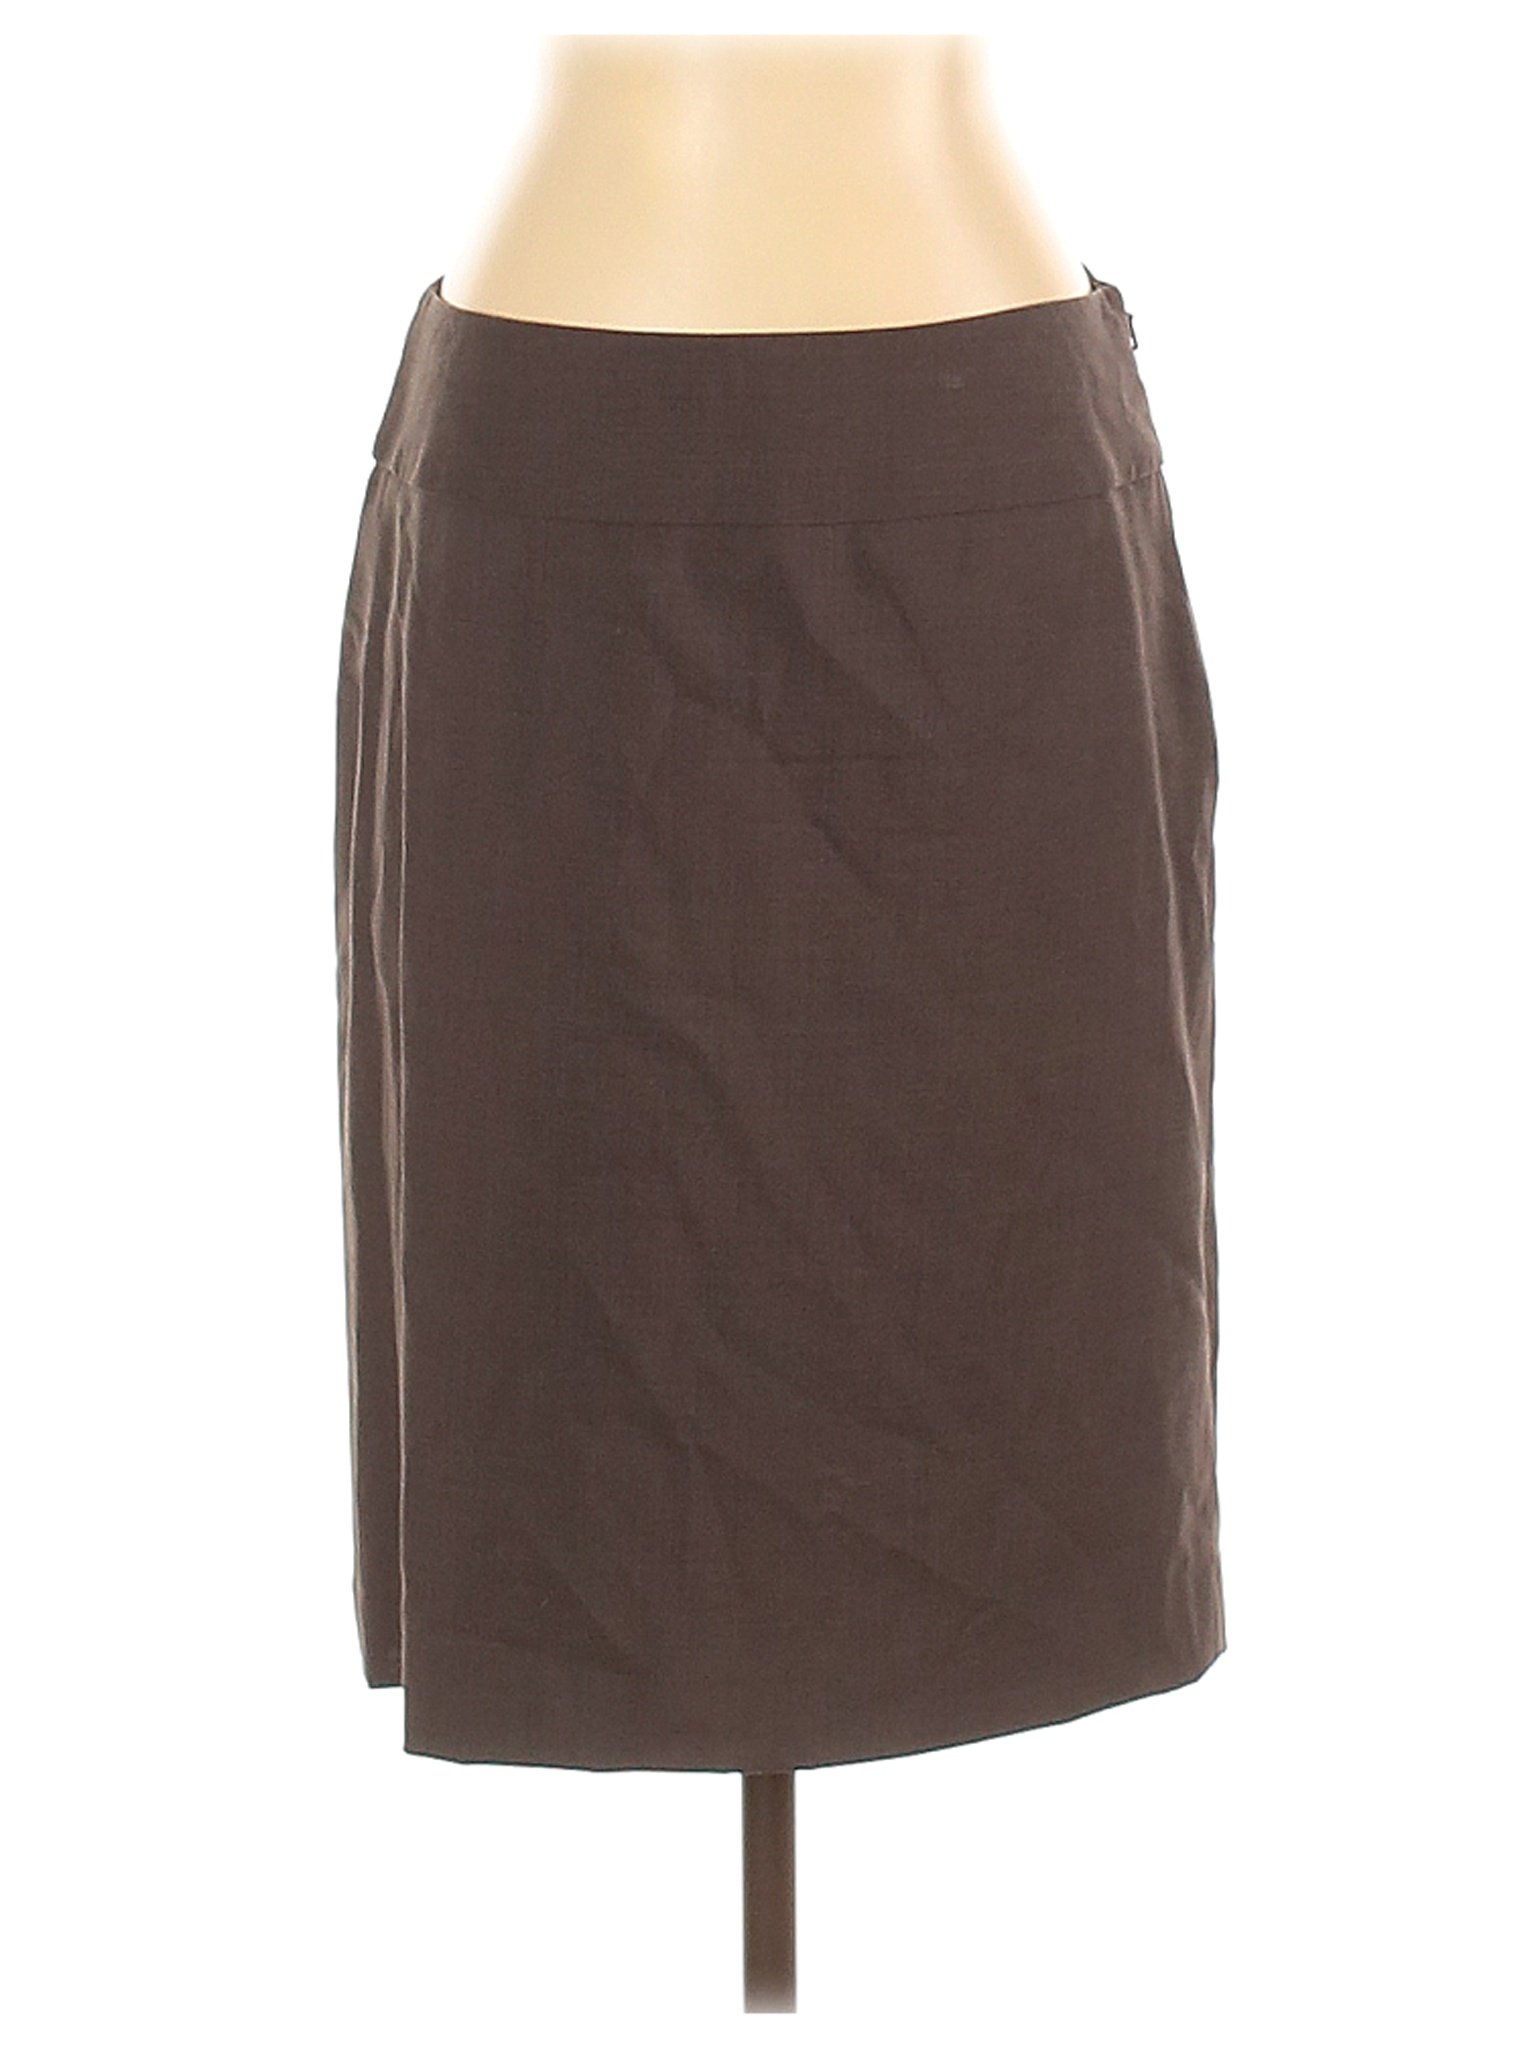 Banana Republic Women Brown Wool Skirt 4 Petites | eBay